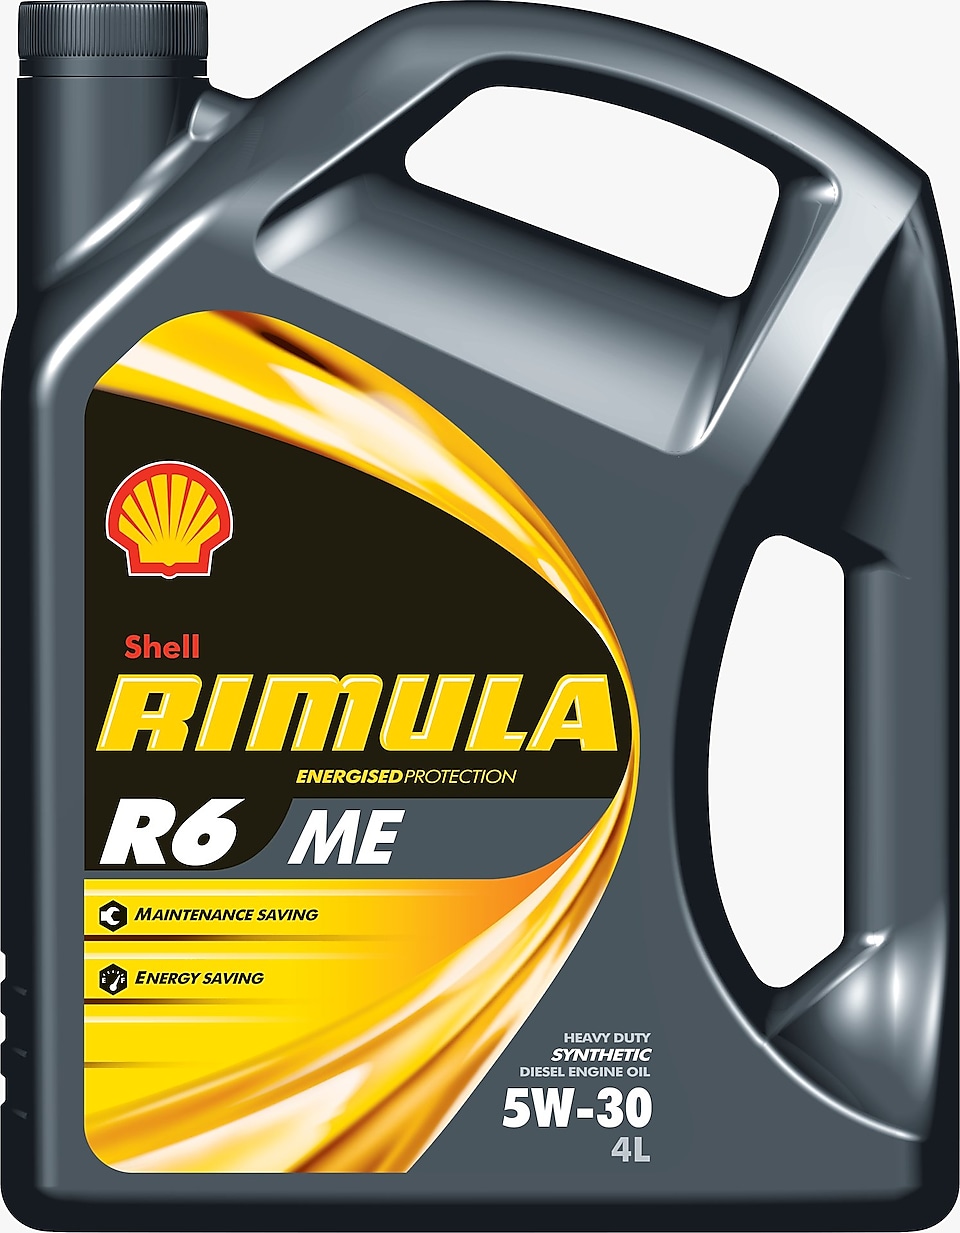 Shell Rimula R6 ME ürün fotoğrafısu